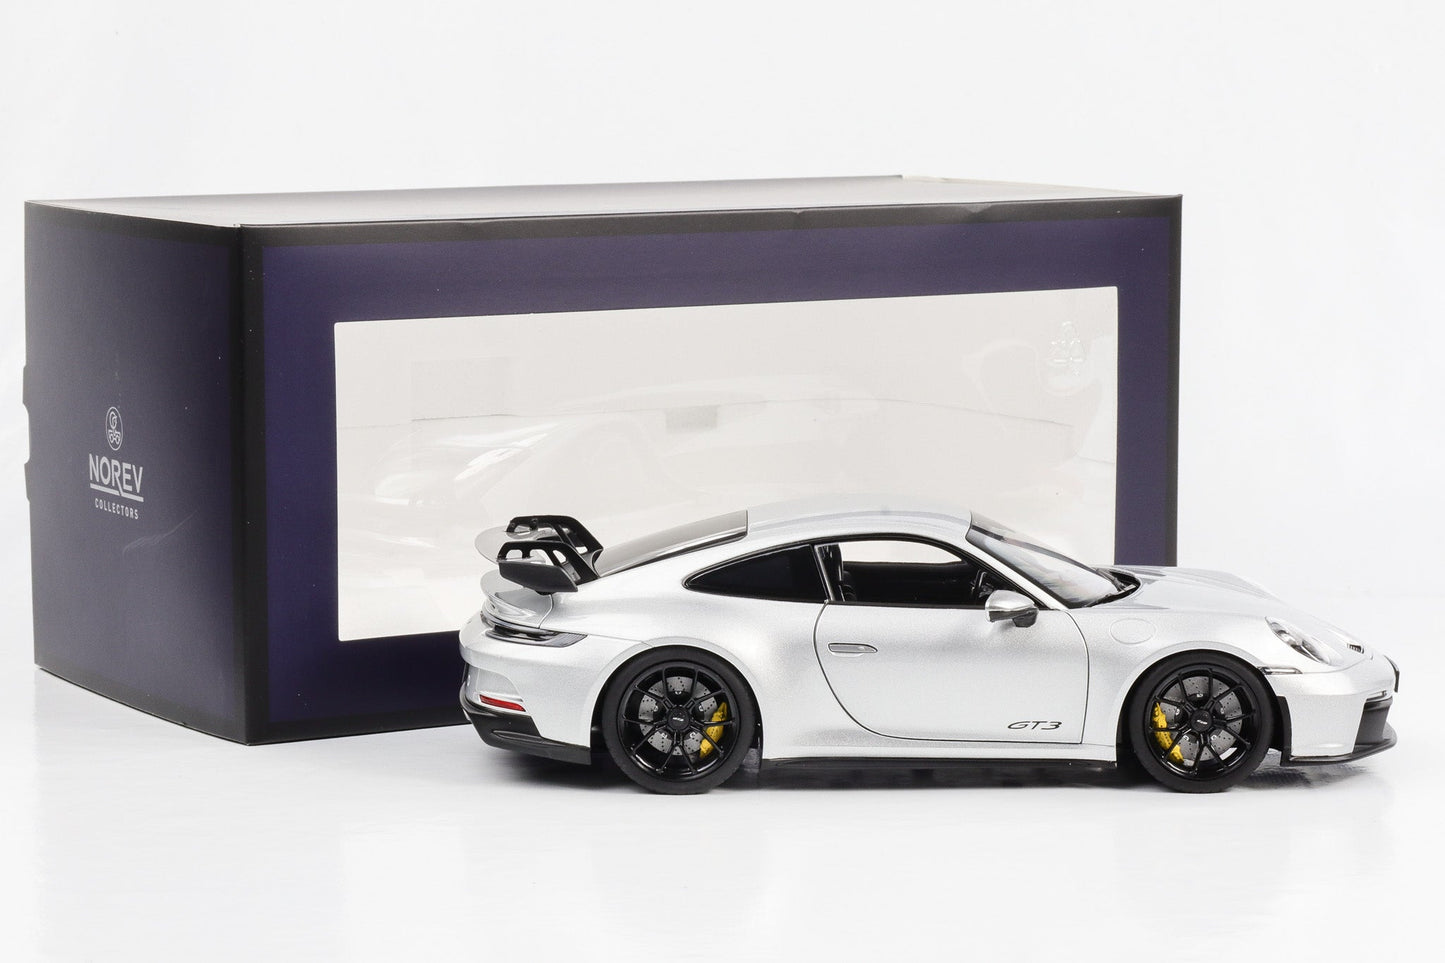 1:18 Porsche 911 992 GT3 2021 silber full opening Norev 187380 limited